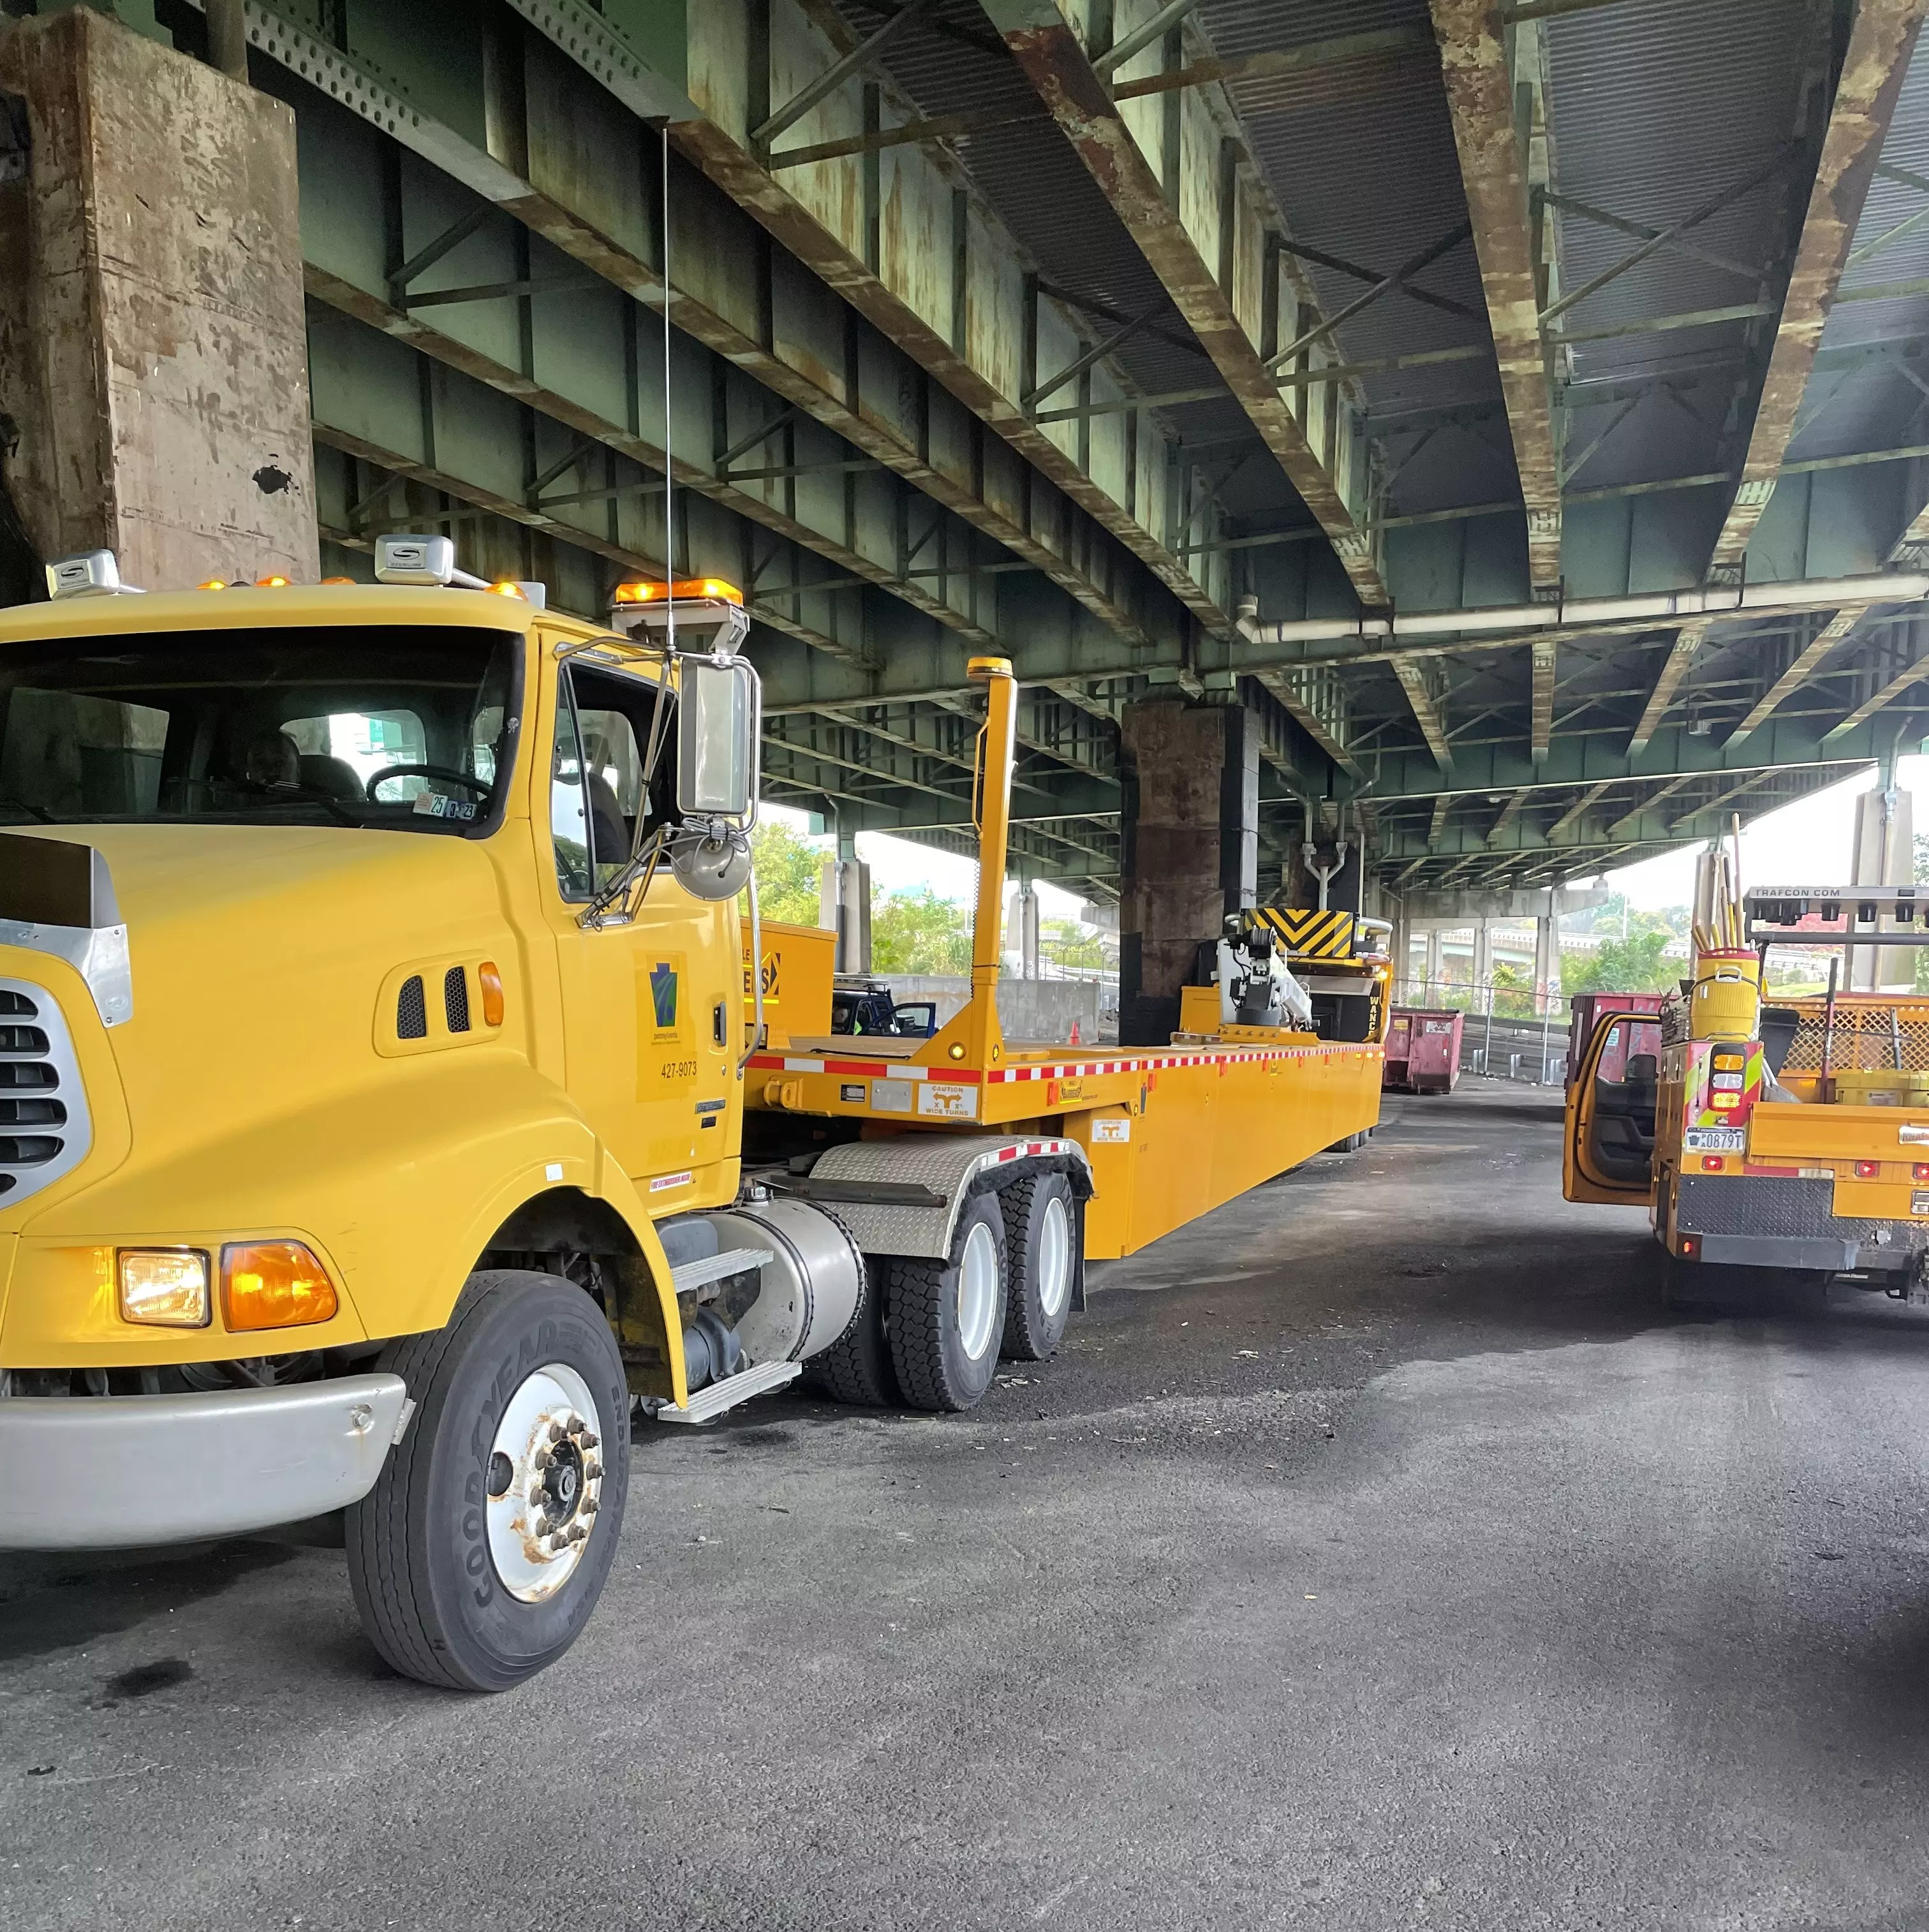 An image of a 110-foot-long yellow mobile truck barrier parked under a bridge overpass.